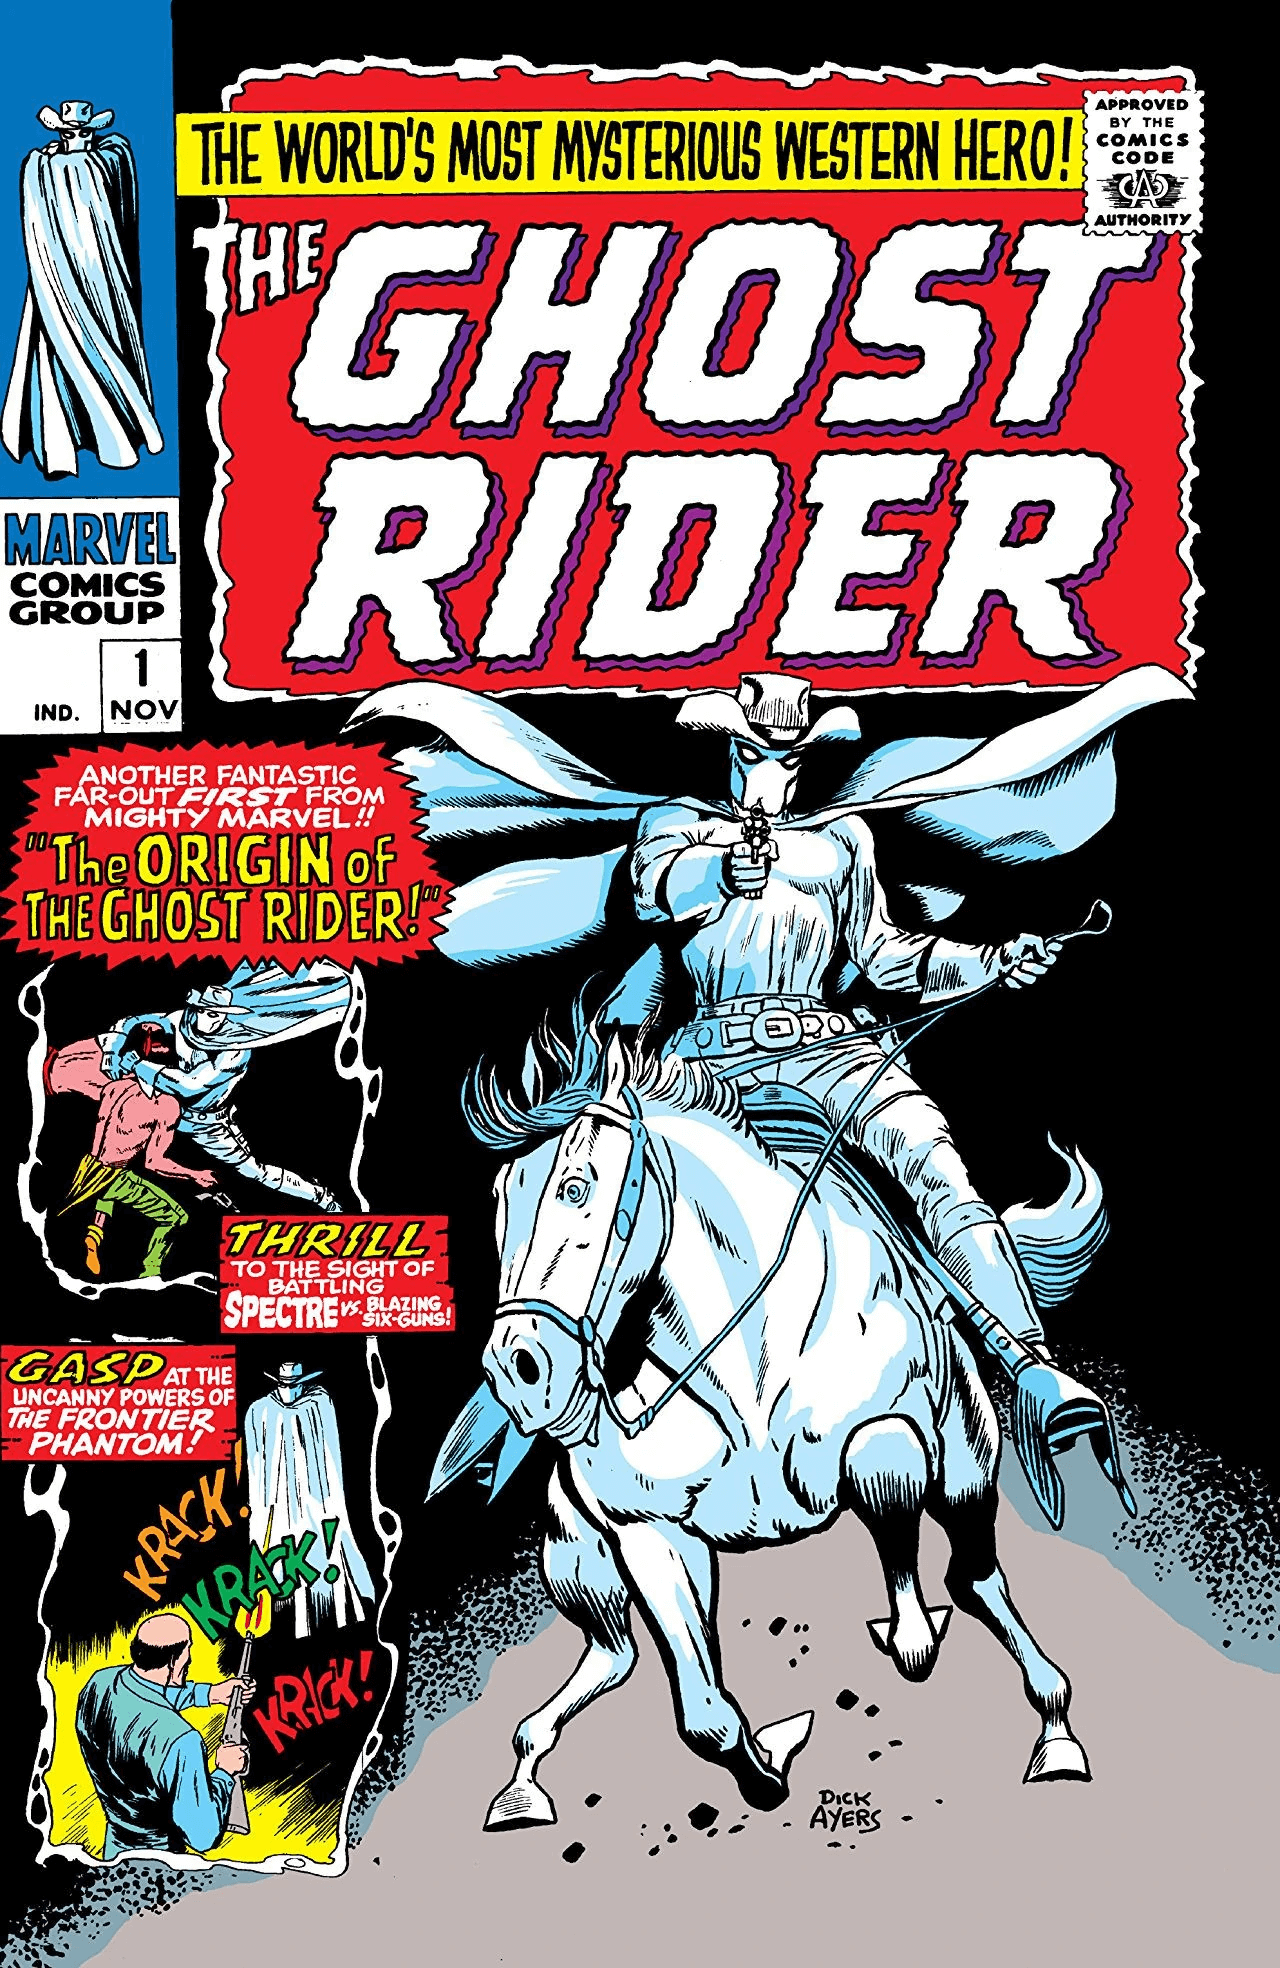 Cover di Ghost Rider 1 del 1966, di Dick Ayers